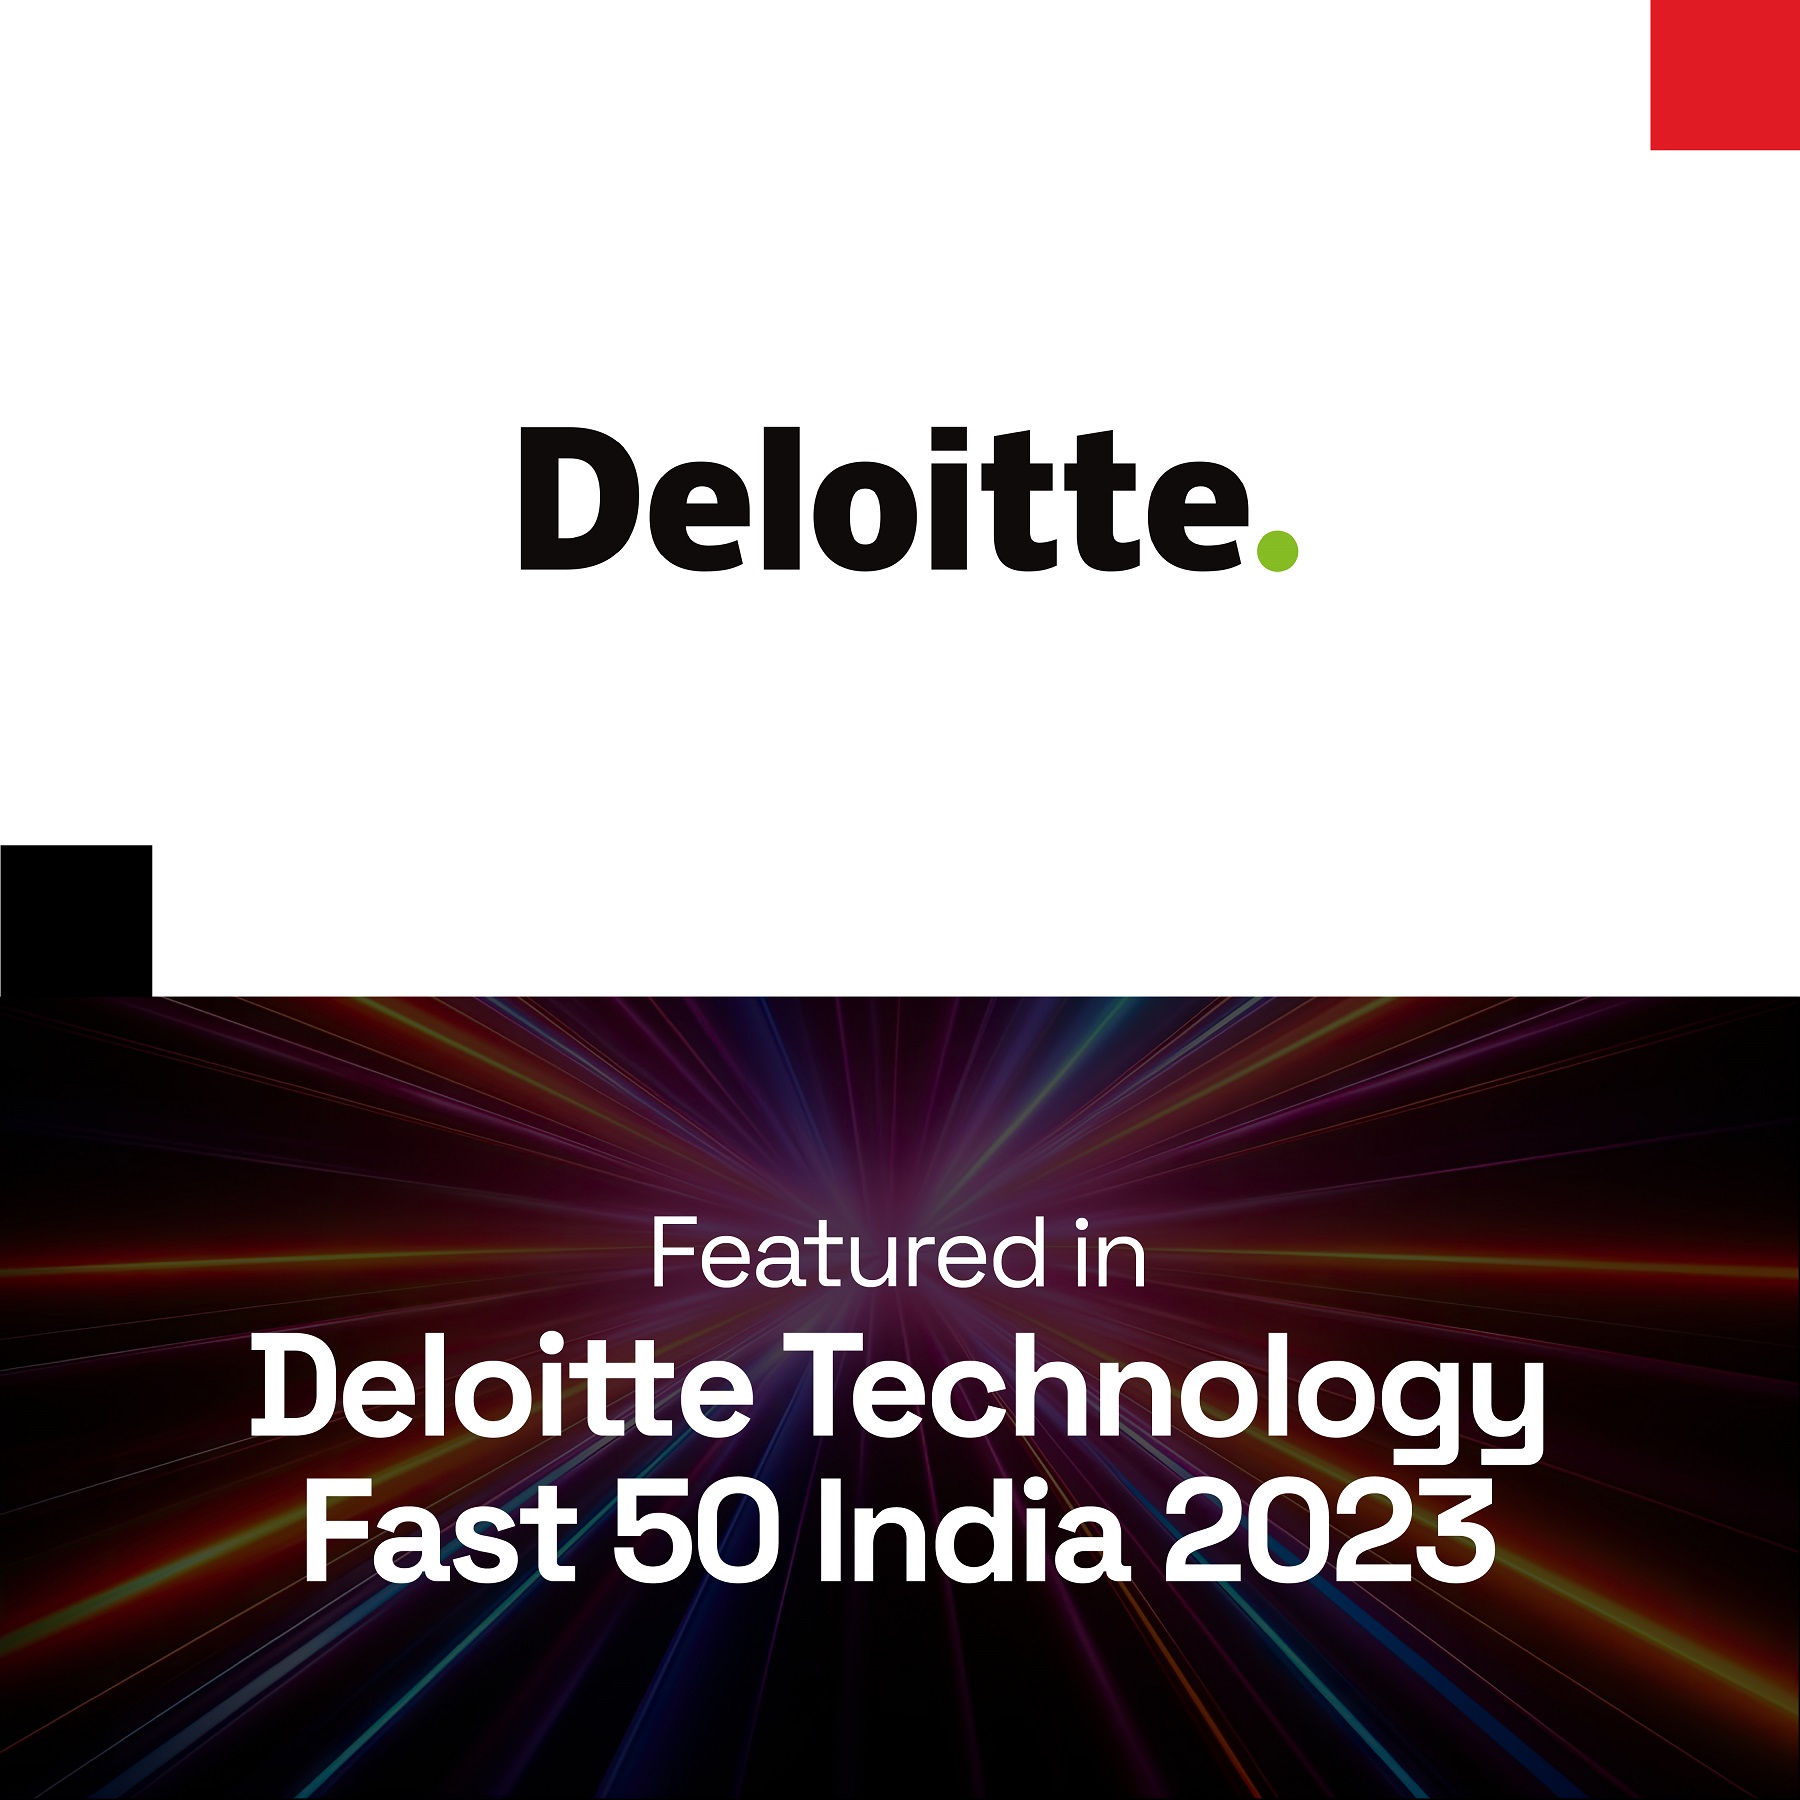 Deloitte's TechFast50 banner 2023